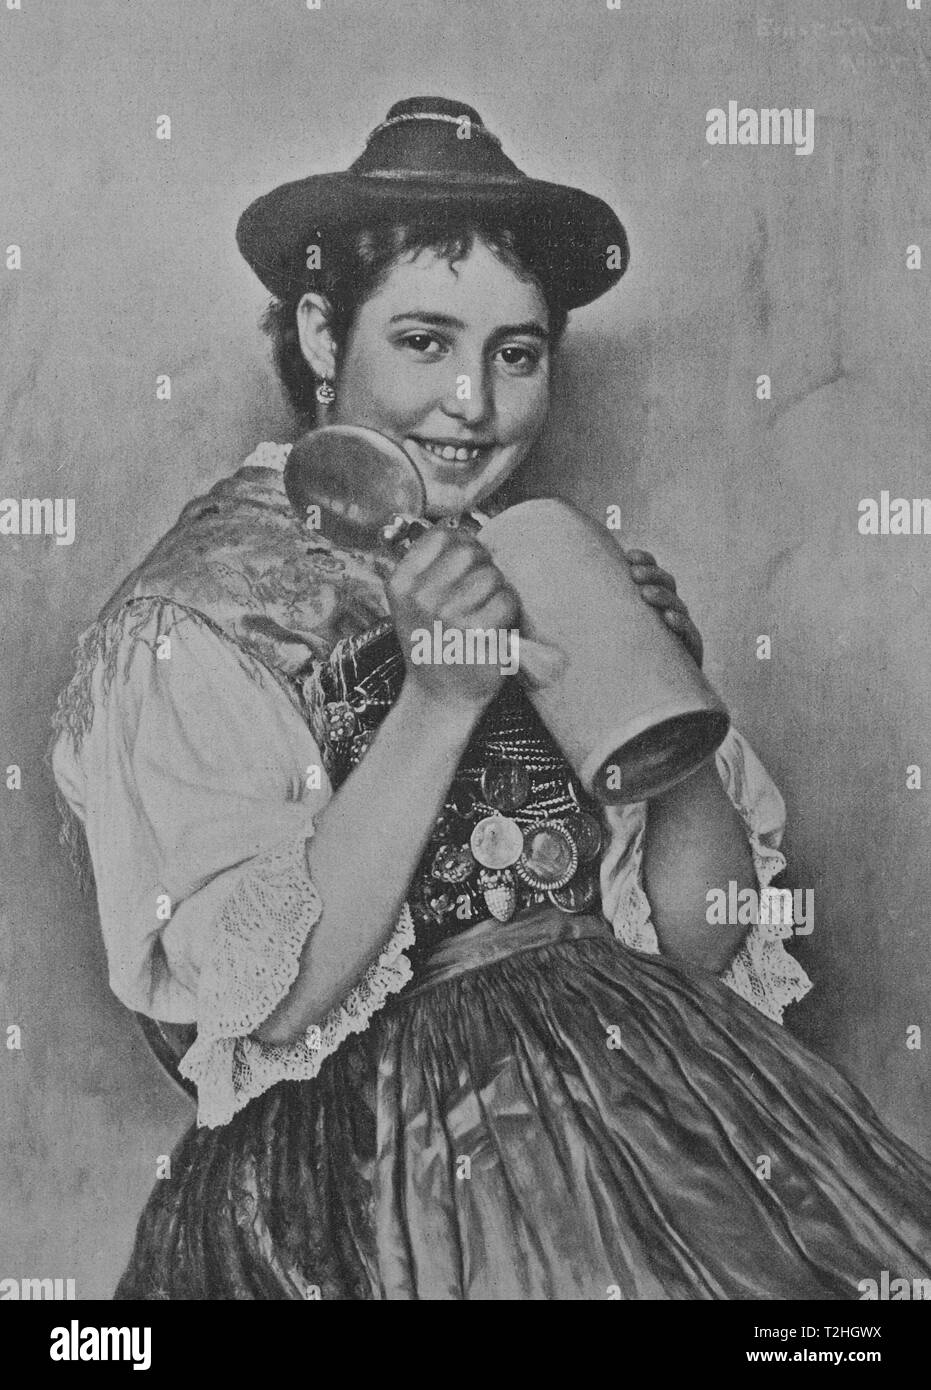 Bavarian woman wearing traditional dress and holding a beer mug, Bavaria, 1899, historical illustration, Germany Stock Photo